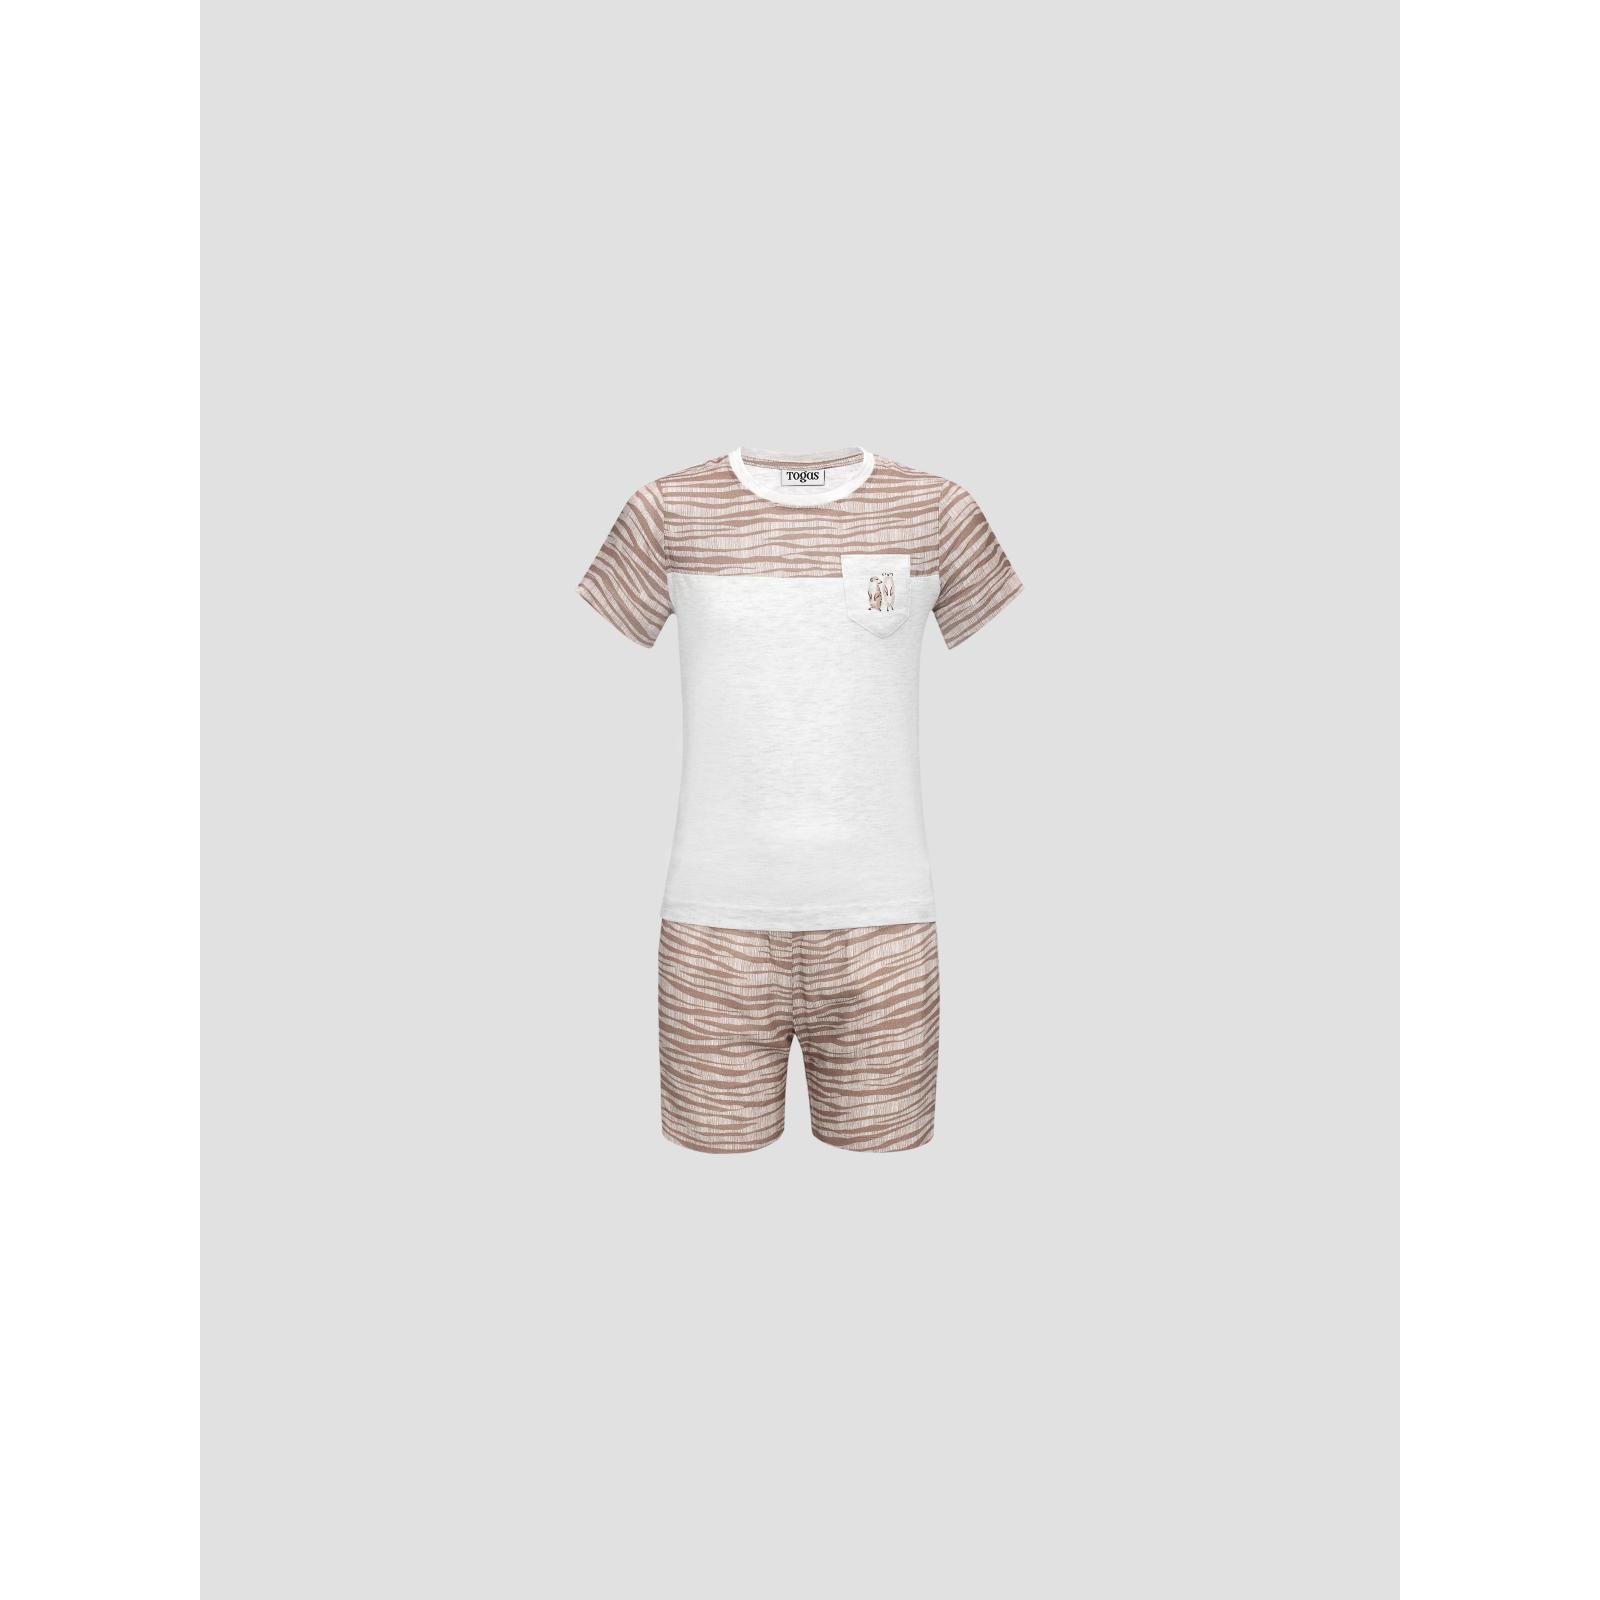 Пижама для мальчиков Kids by togas Сафари бежевый 140-146 см жен пижама с брюками фреш розовый р 48